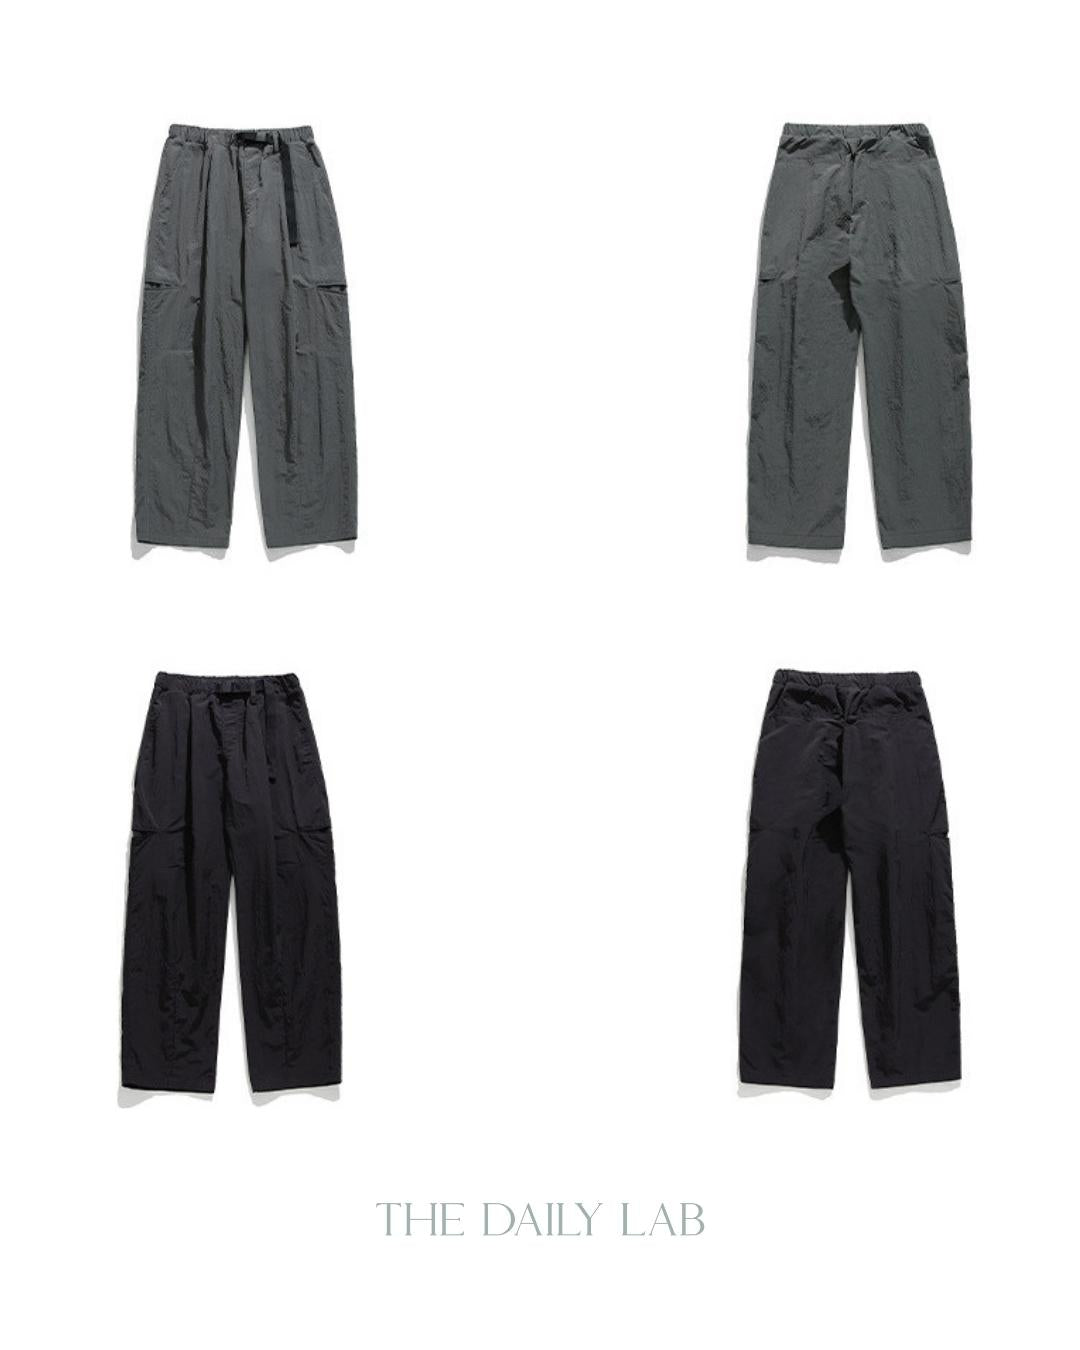 Buckle Outdoor Functional Long Pants in Black